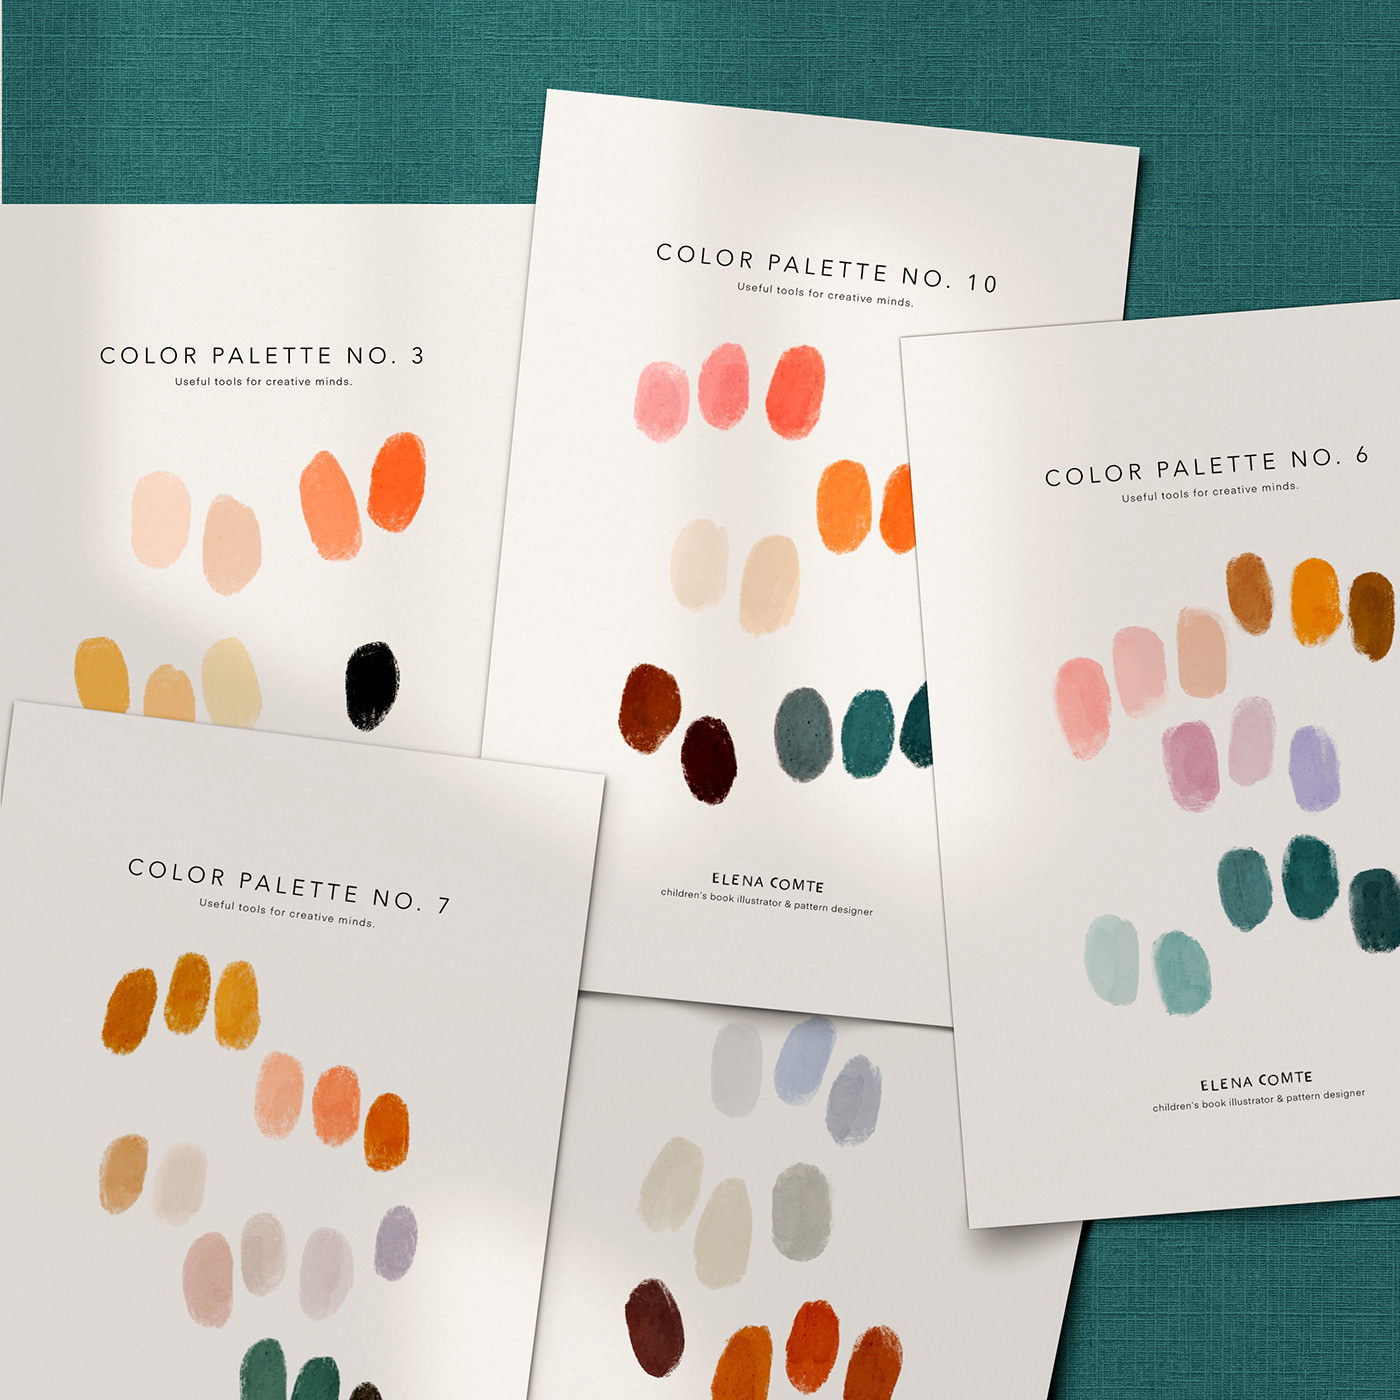 Color palette cards created by children's book illustrator and designer Elena Comte.